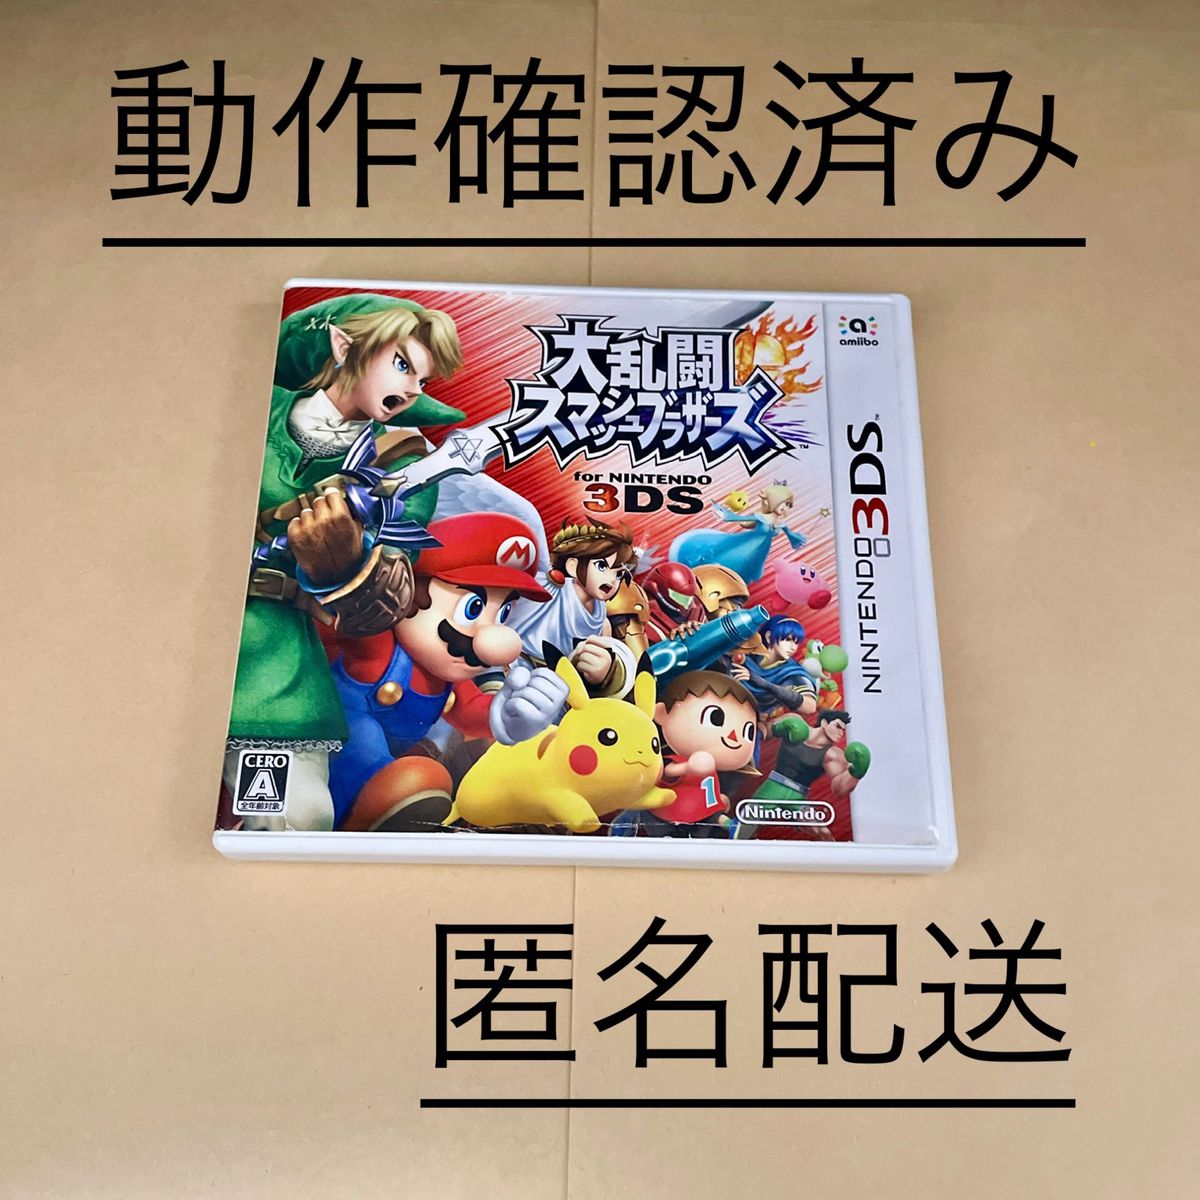 165【3DS】 大乱闘スマッシュブラザーズ for Nintendo 3DS  